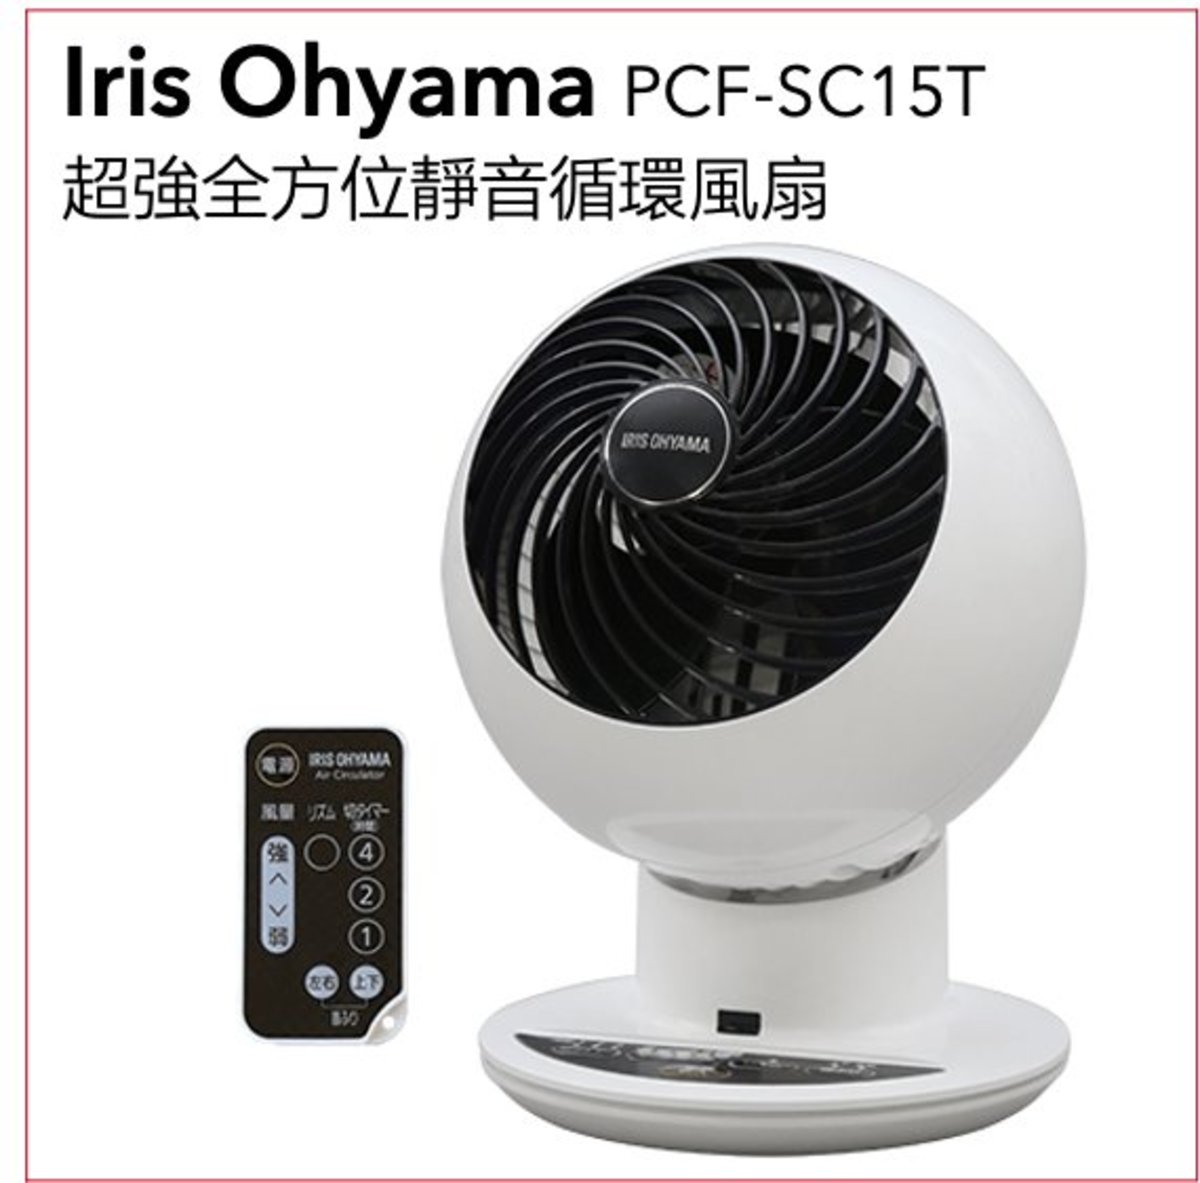 IRIS OHYAMA, Iris Ohyama PCF-SC15T Air Circulation Fan with Remote Control  - White, Color : white black